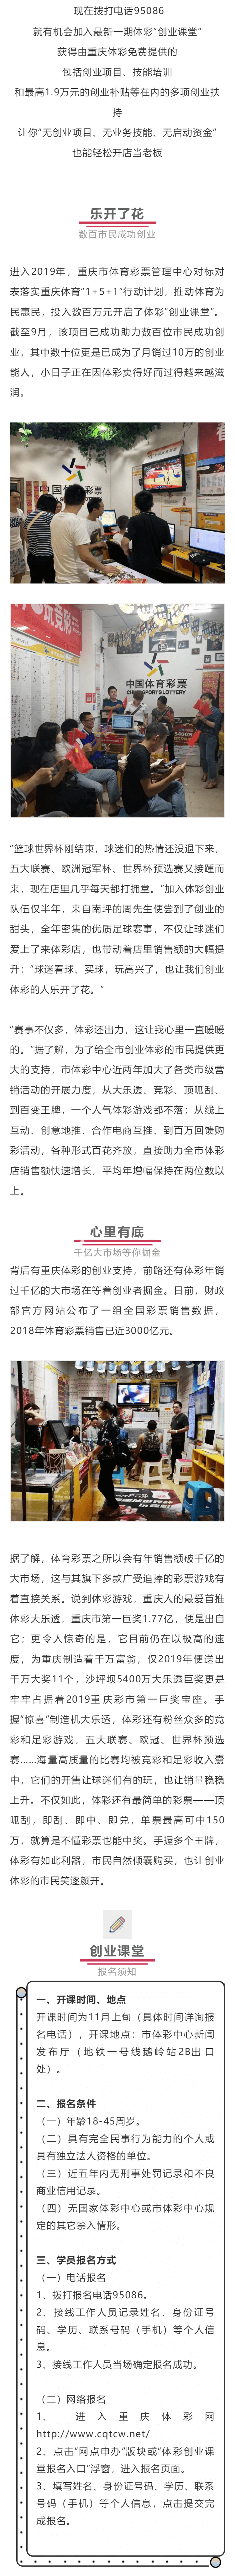 20191101_0942_yiban_screenshot.png